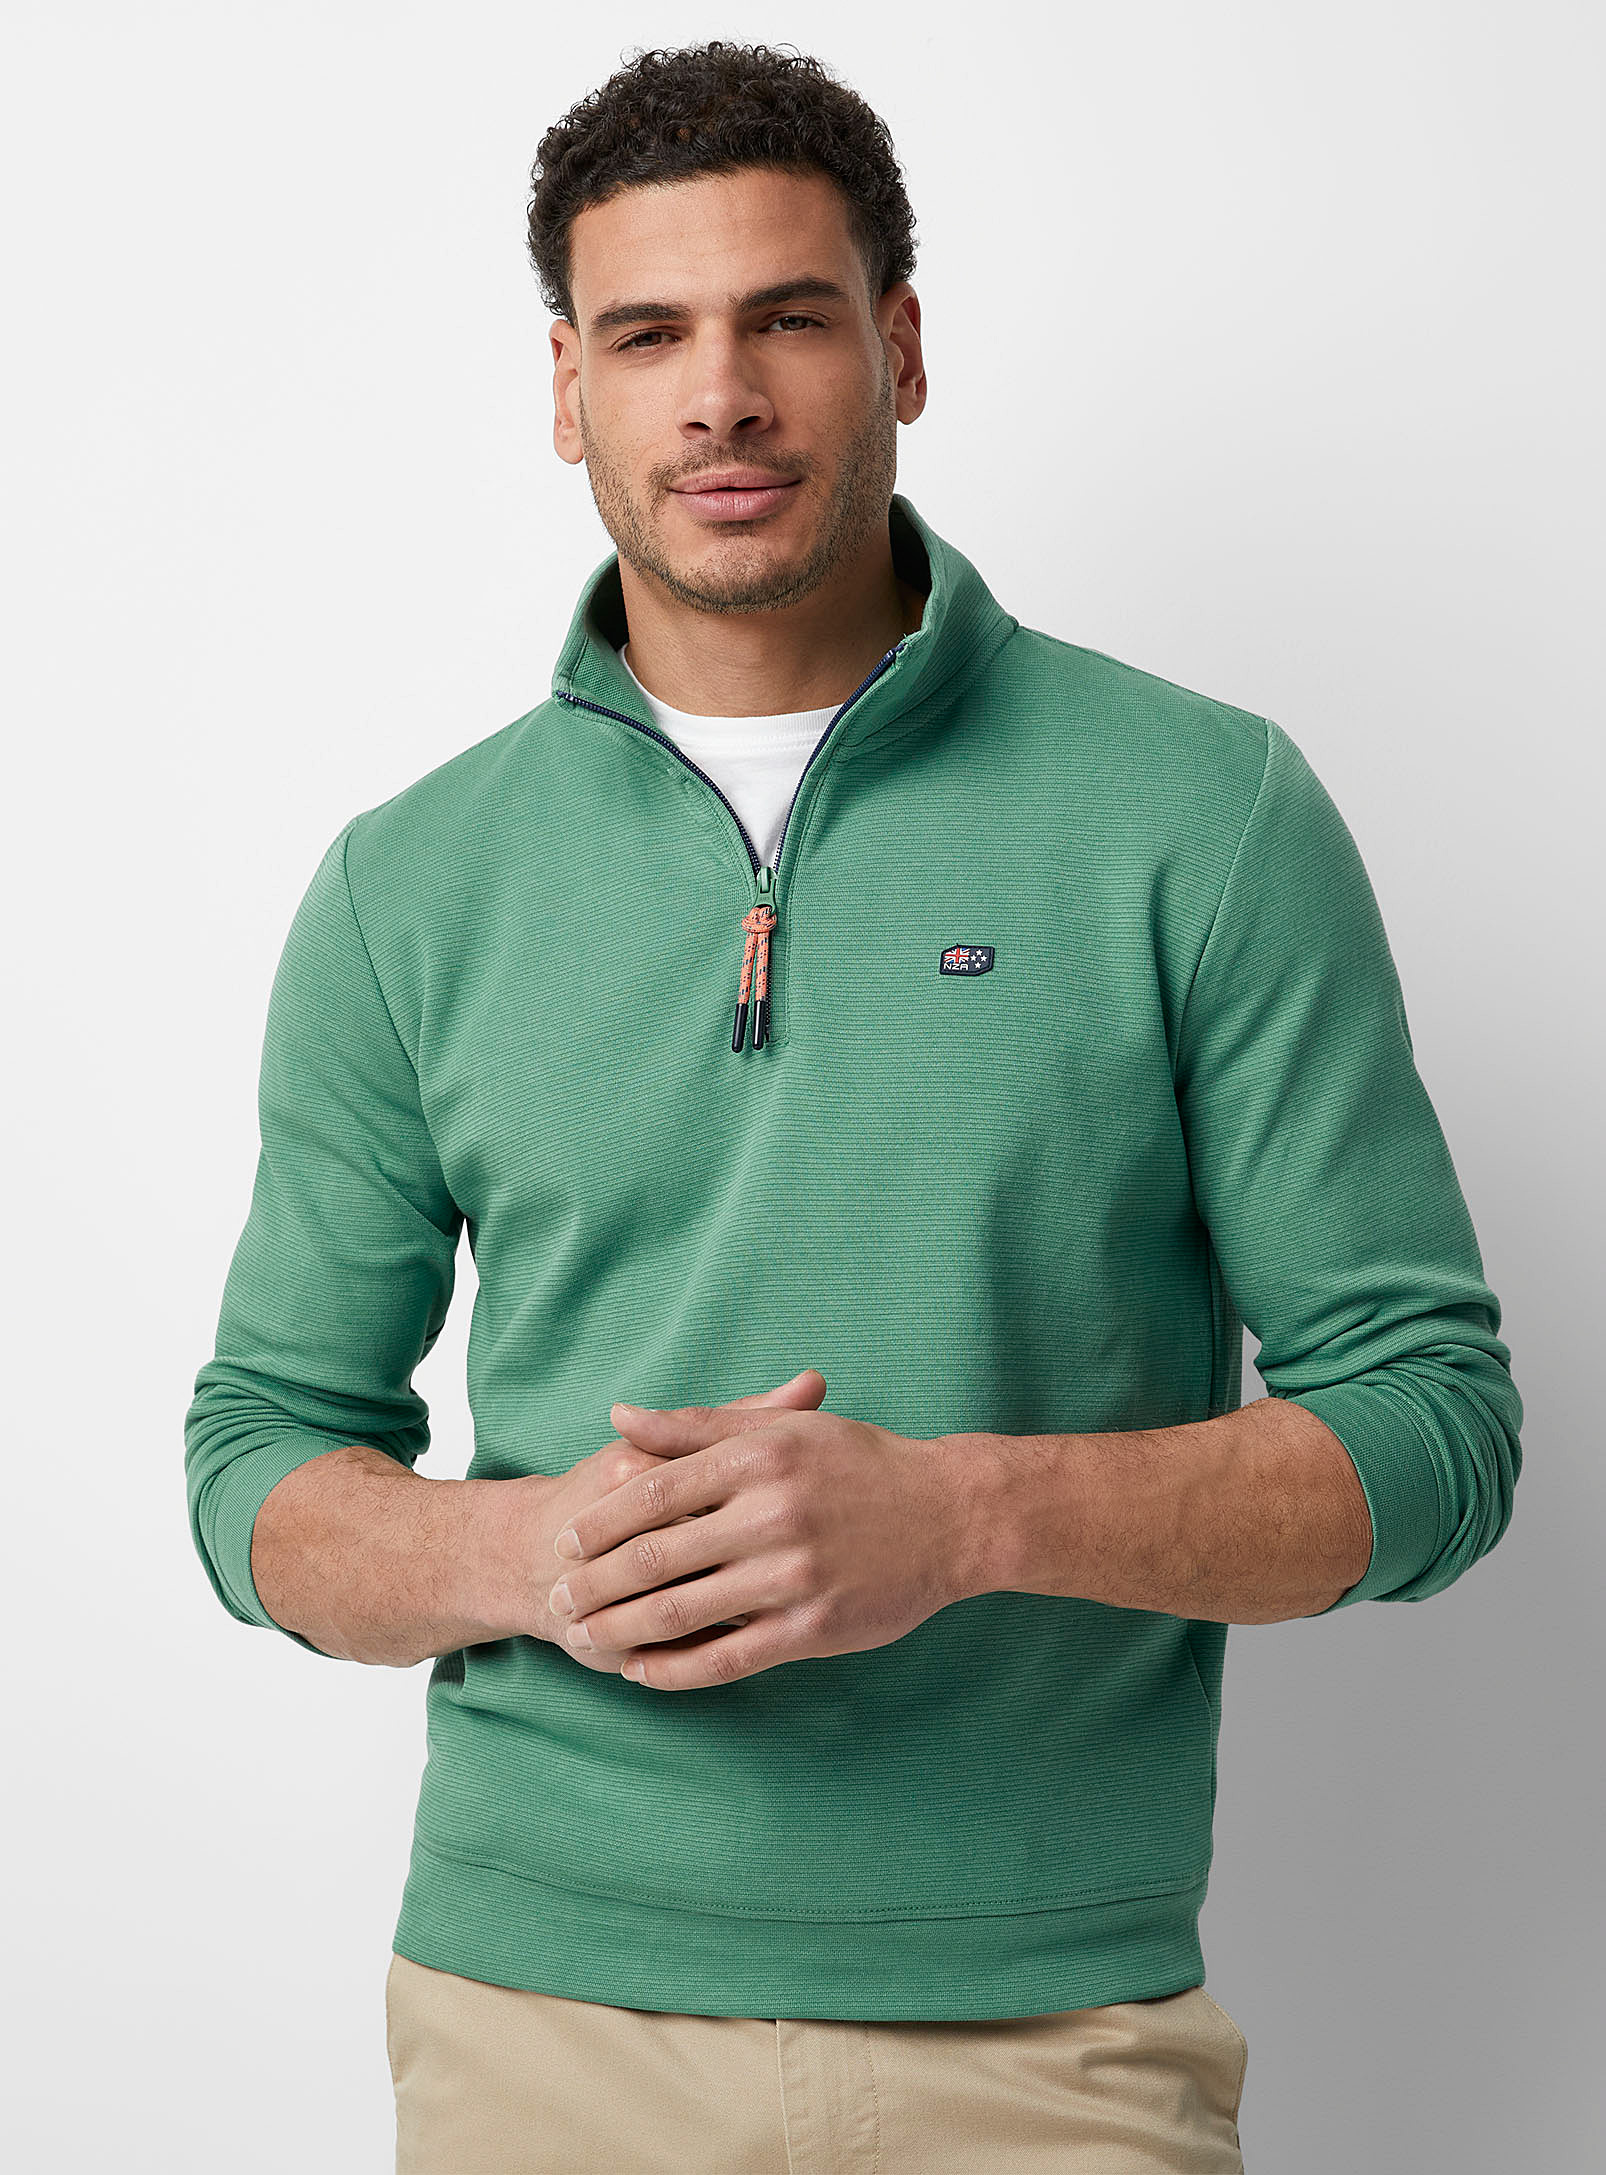 New Zealand Auckland - Men's Bold green zip-neck sweater